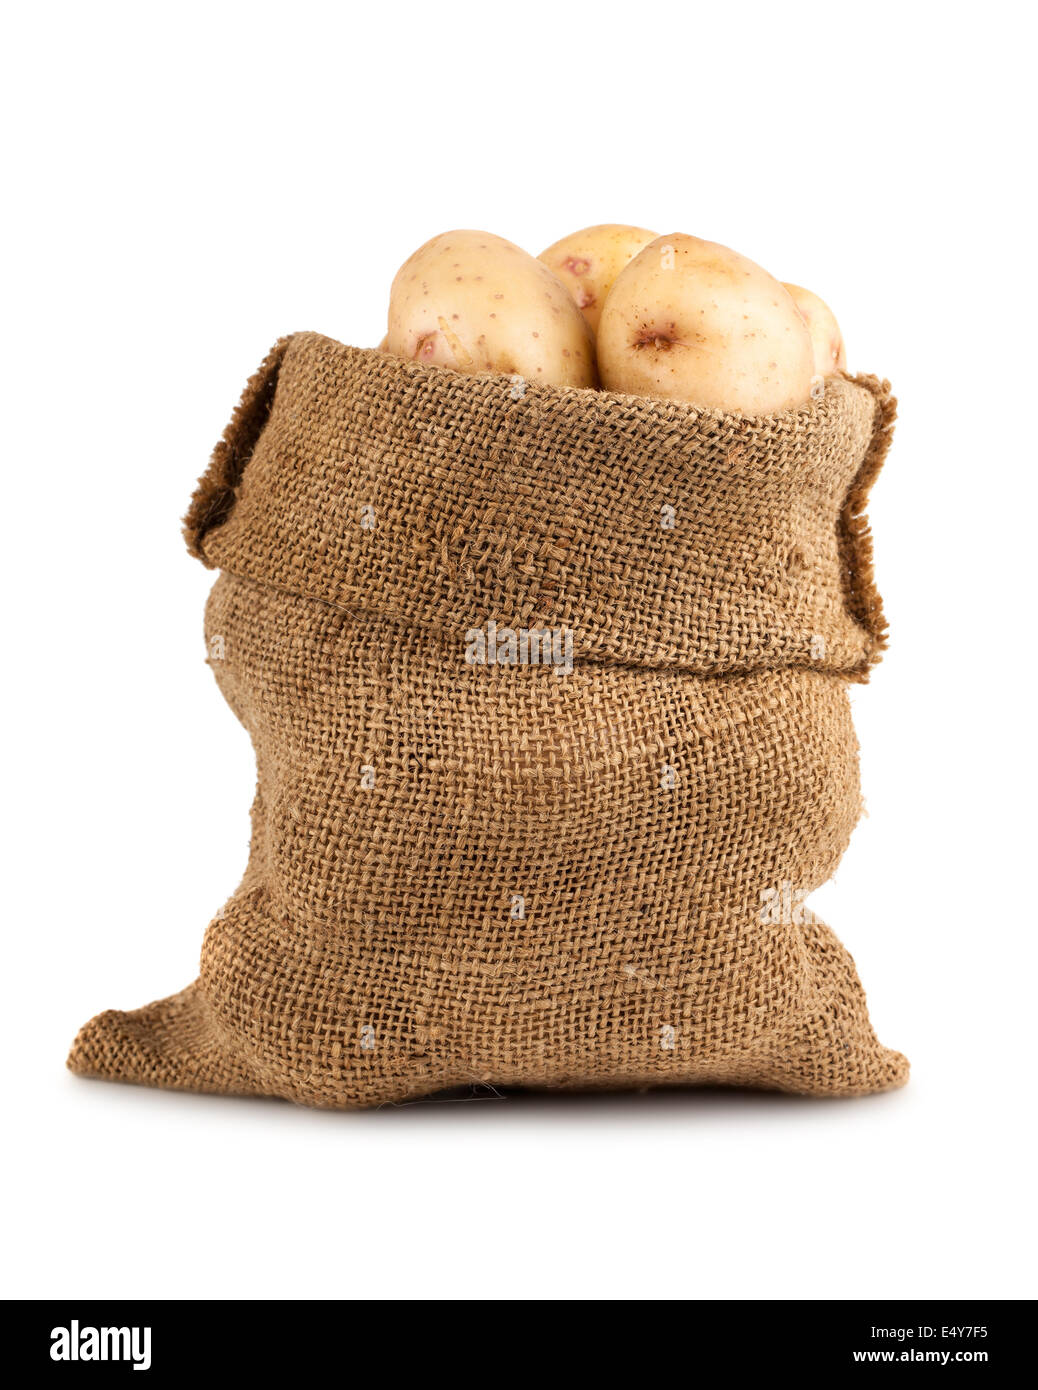 Patata madura en saco de henequen Foto de stock